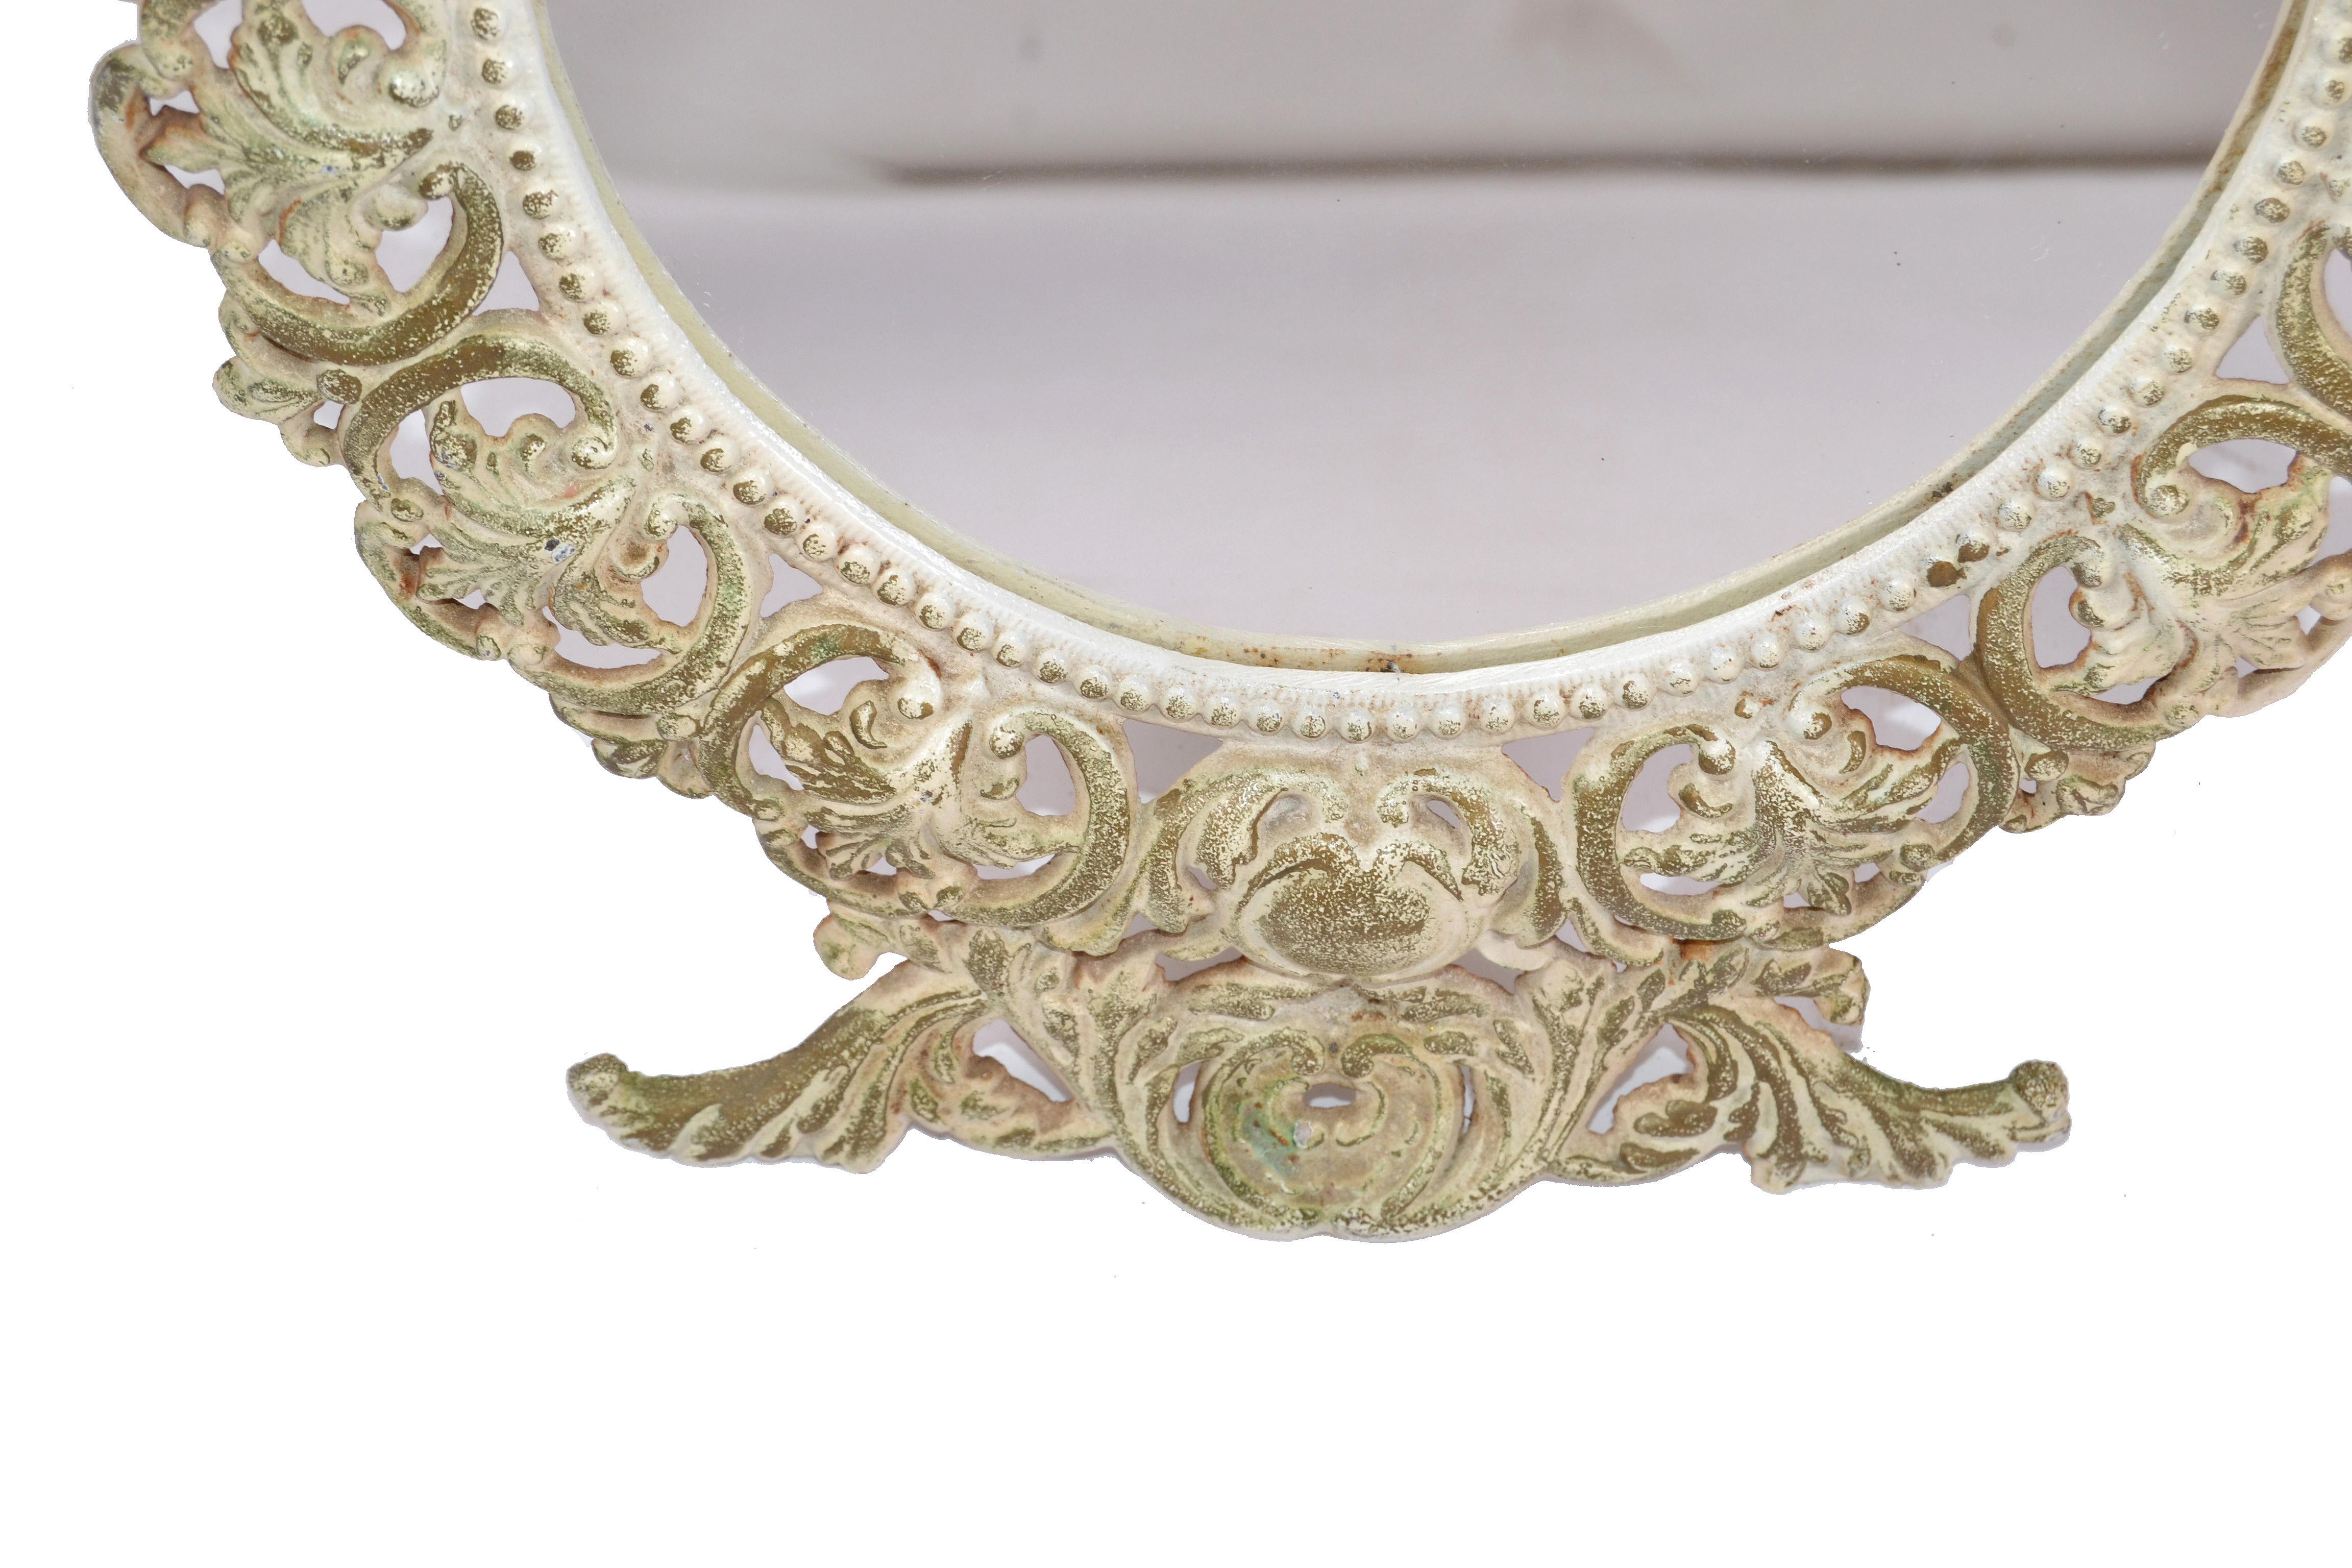 50s Art Nouveau Cast Iron Table Vanity Mirror Desk Accessories Distressed Finish In Good Condition For Sale In Miami, FL